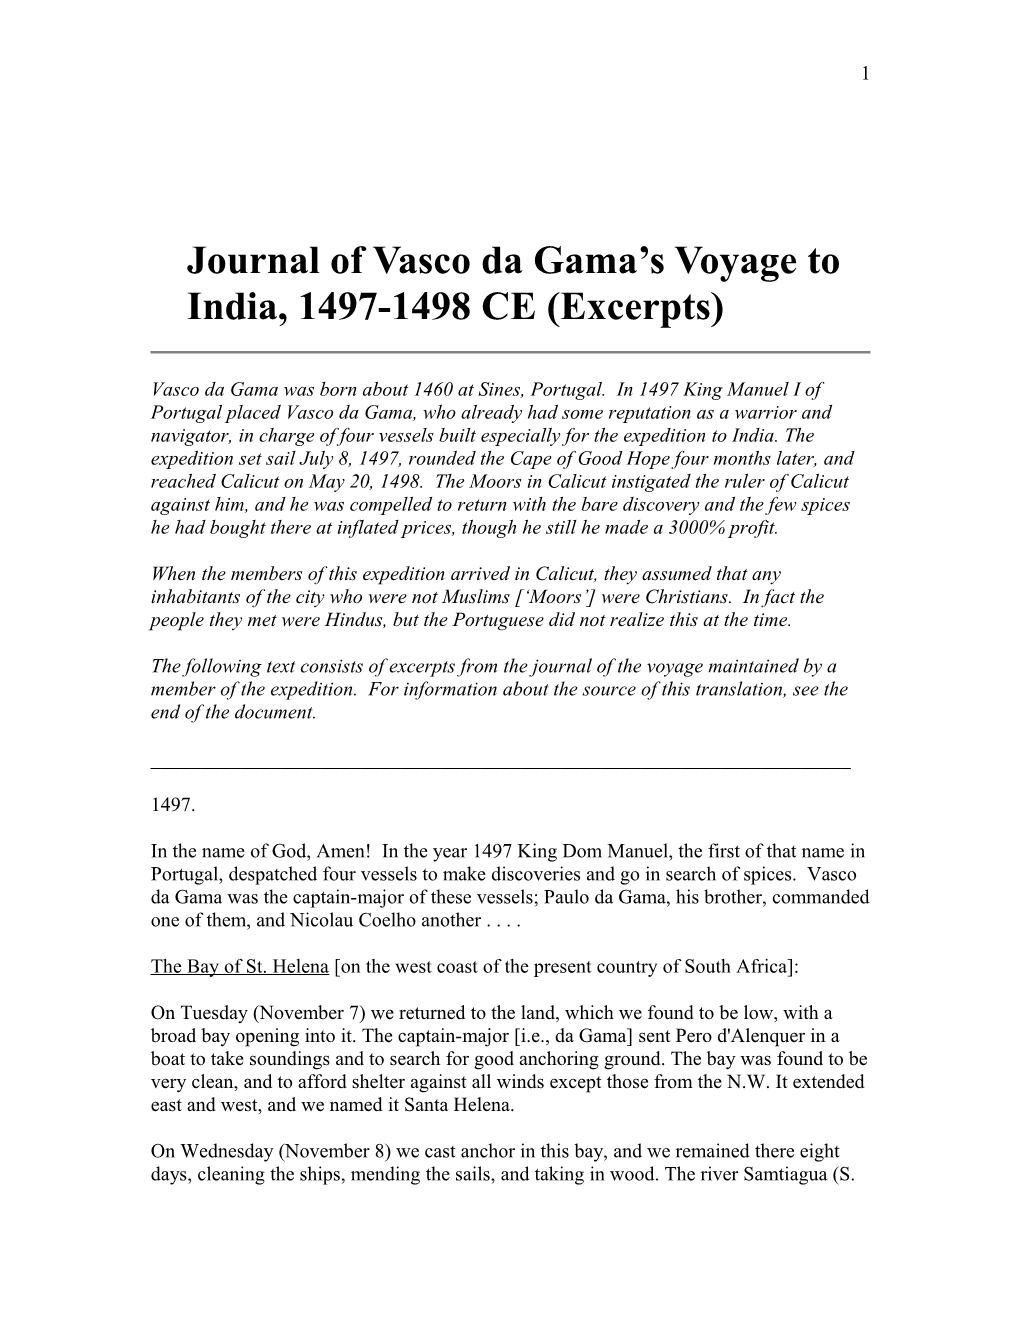 Journal of Vasco Da Gama S Voyage to India, 1497-1498 CE (Excerpts)